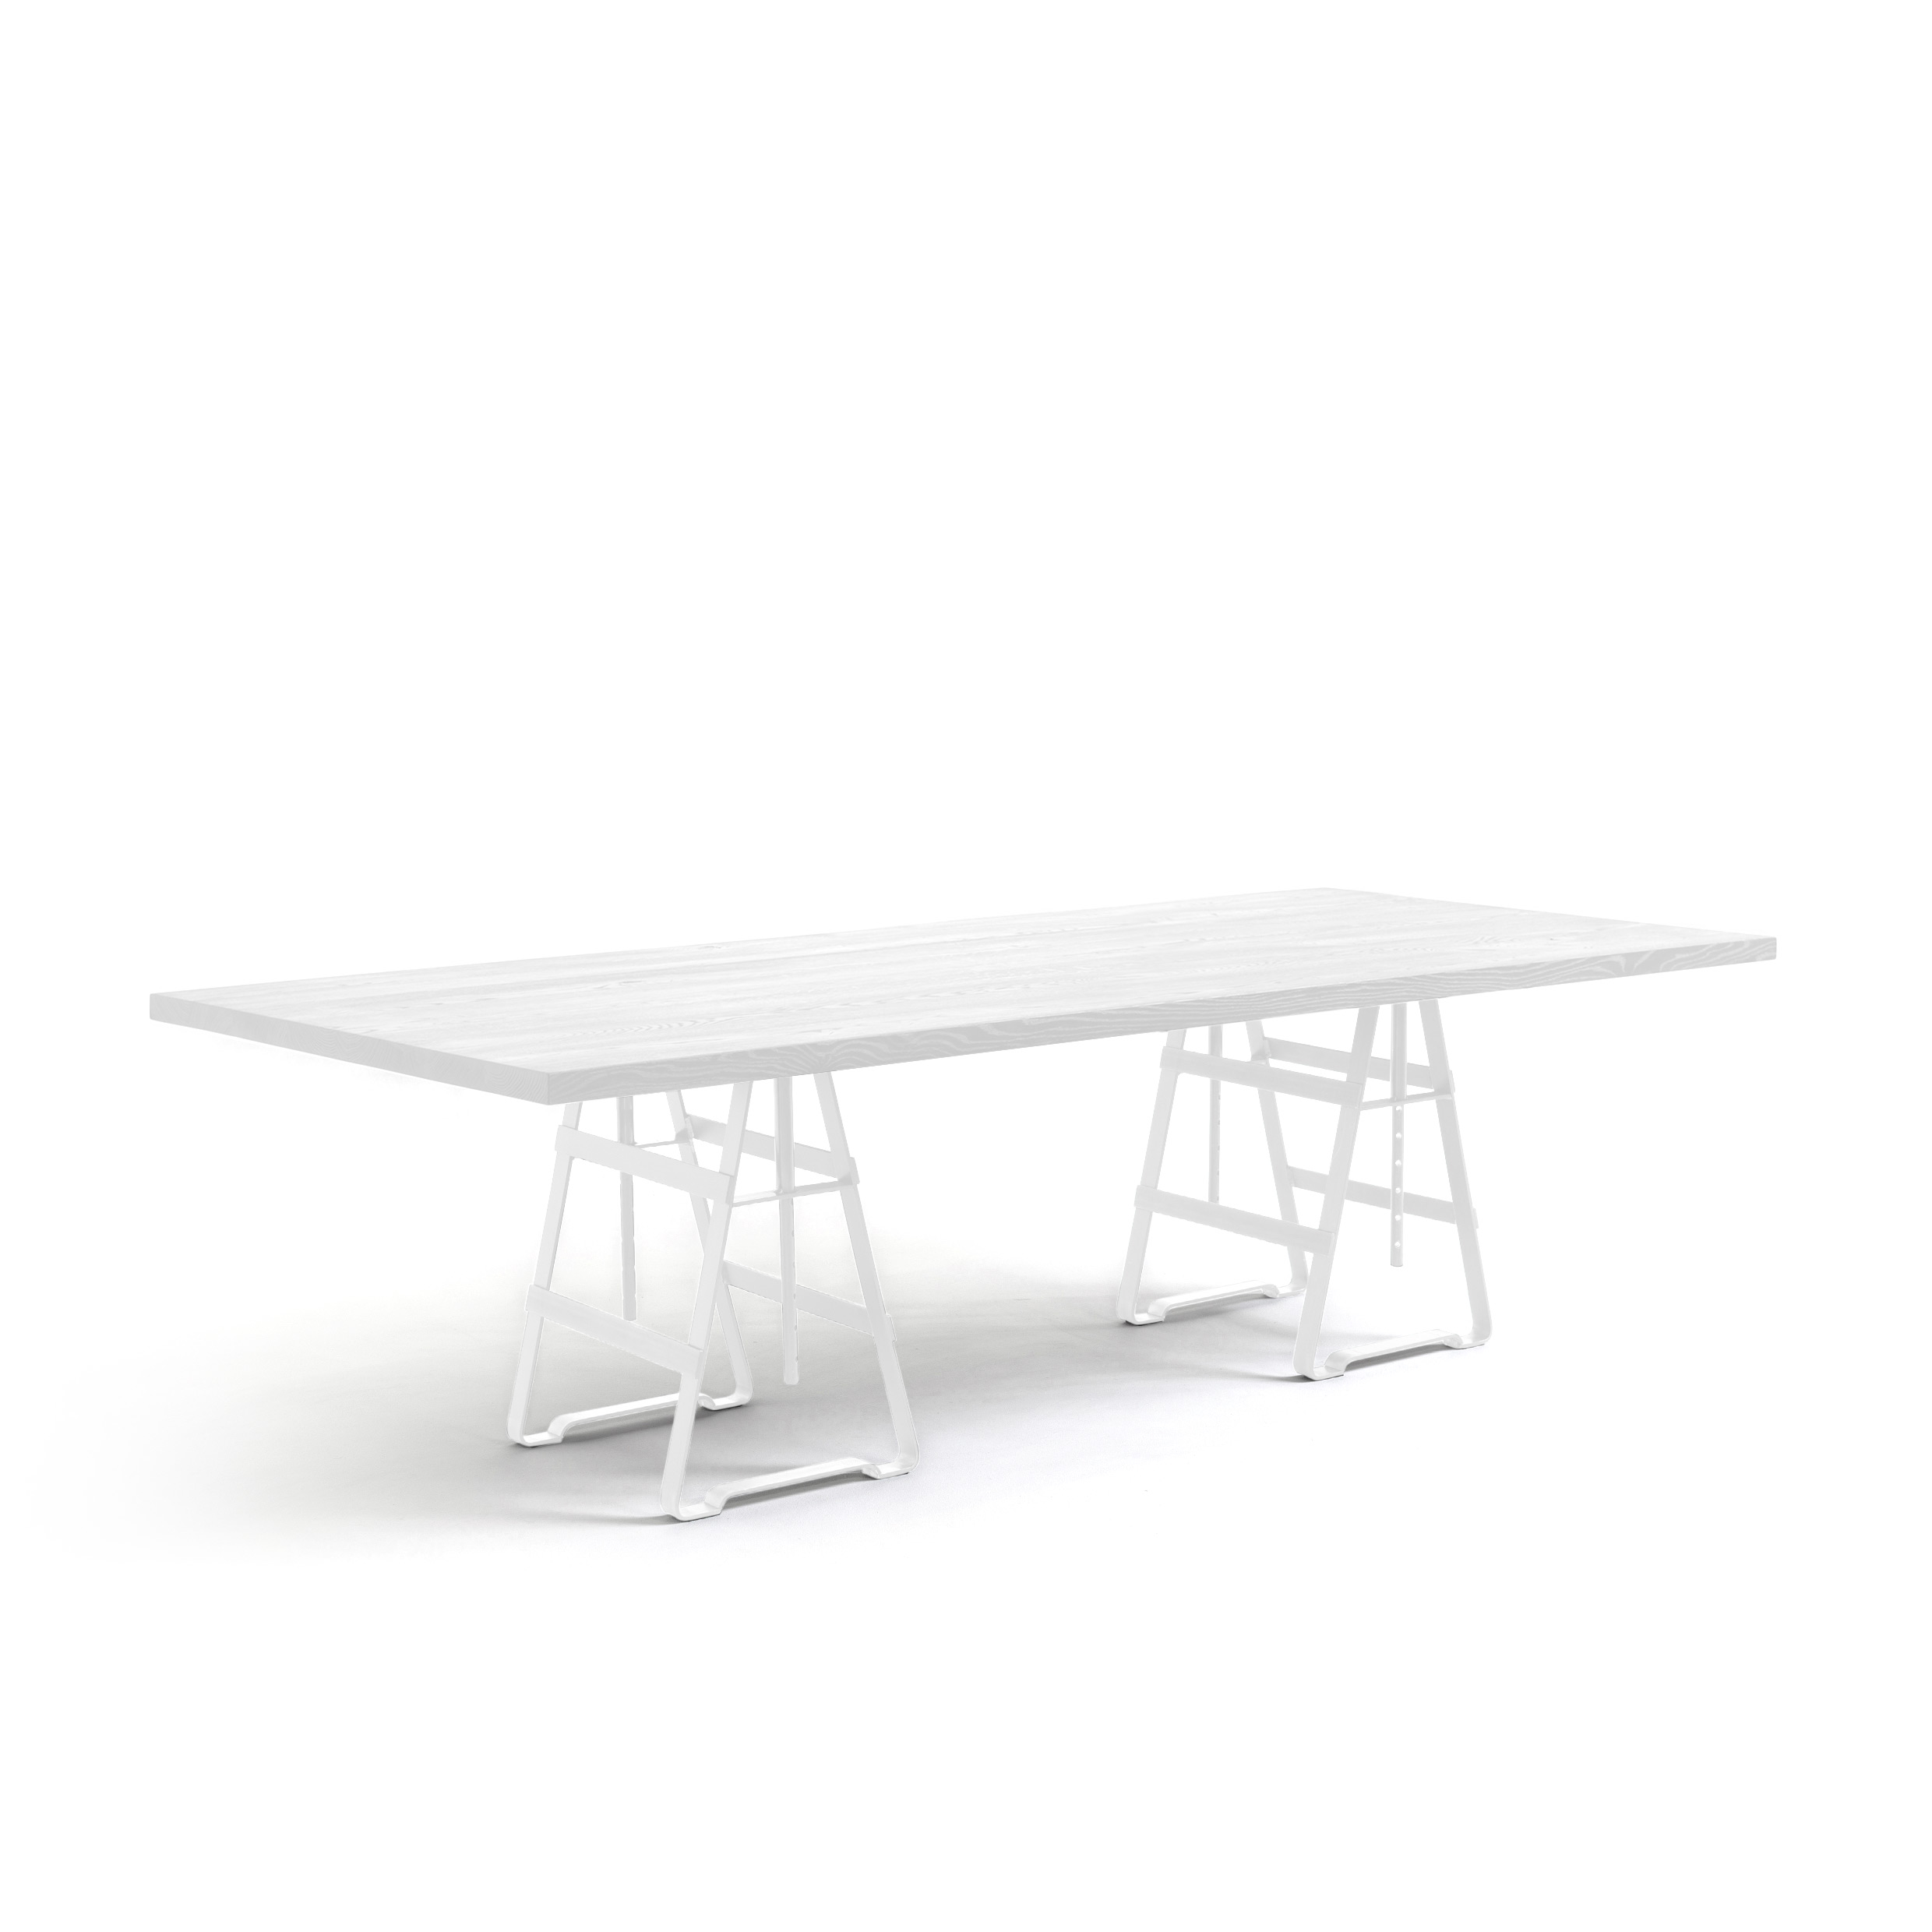 FORM EXCLUSIVE // FYNN - DINING TABLE | GERMAN OAK | WHITE OILED - 240CM X 100CM X 4CM - PAINT MONKEY WHITE